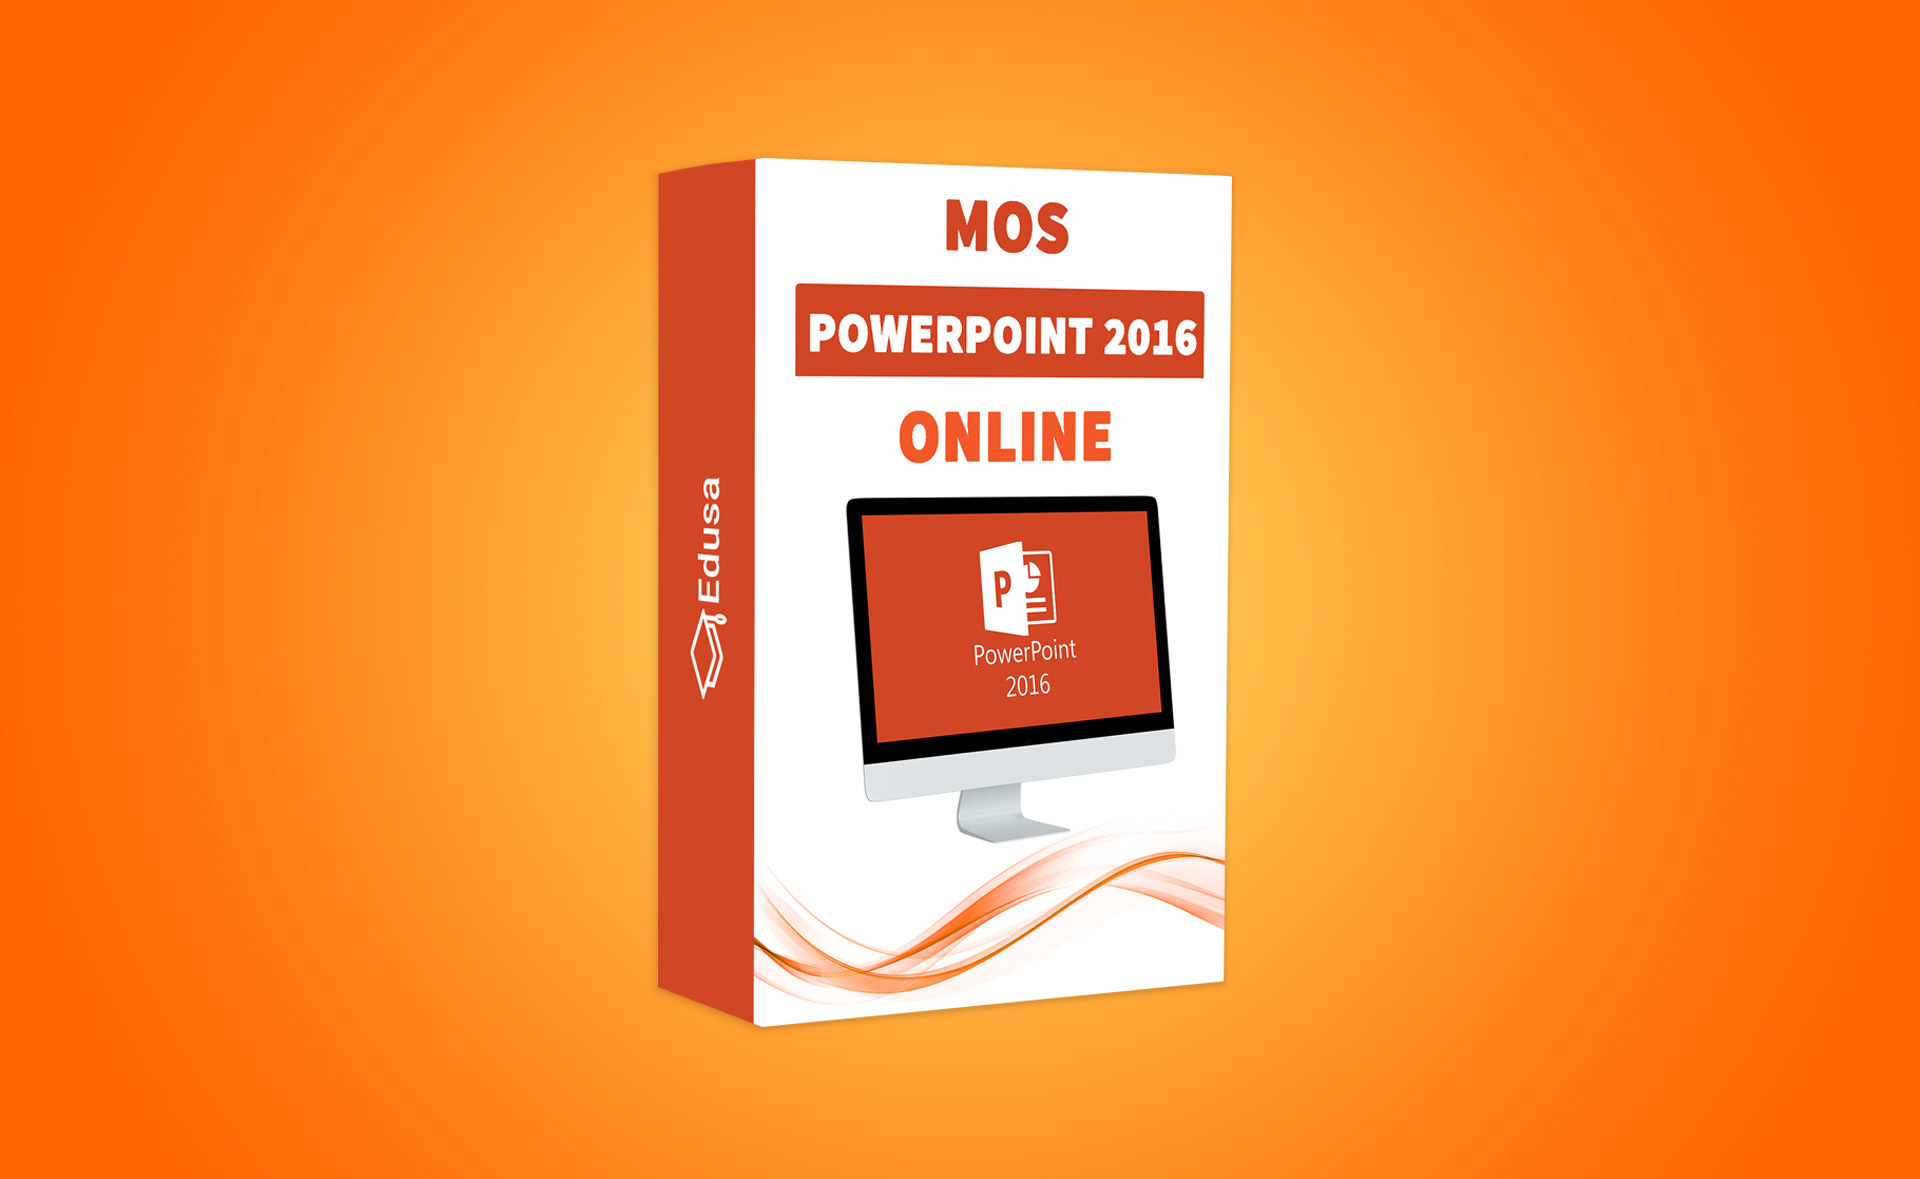 mos powerpoint 2016 online edusa 2